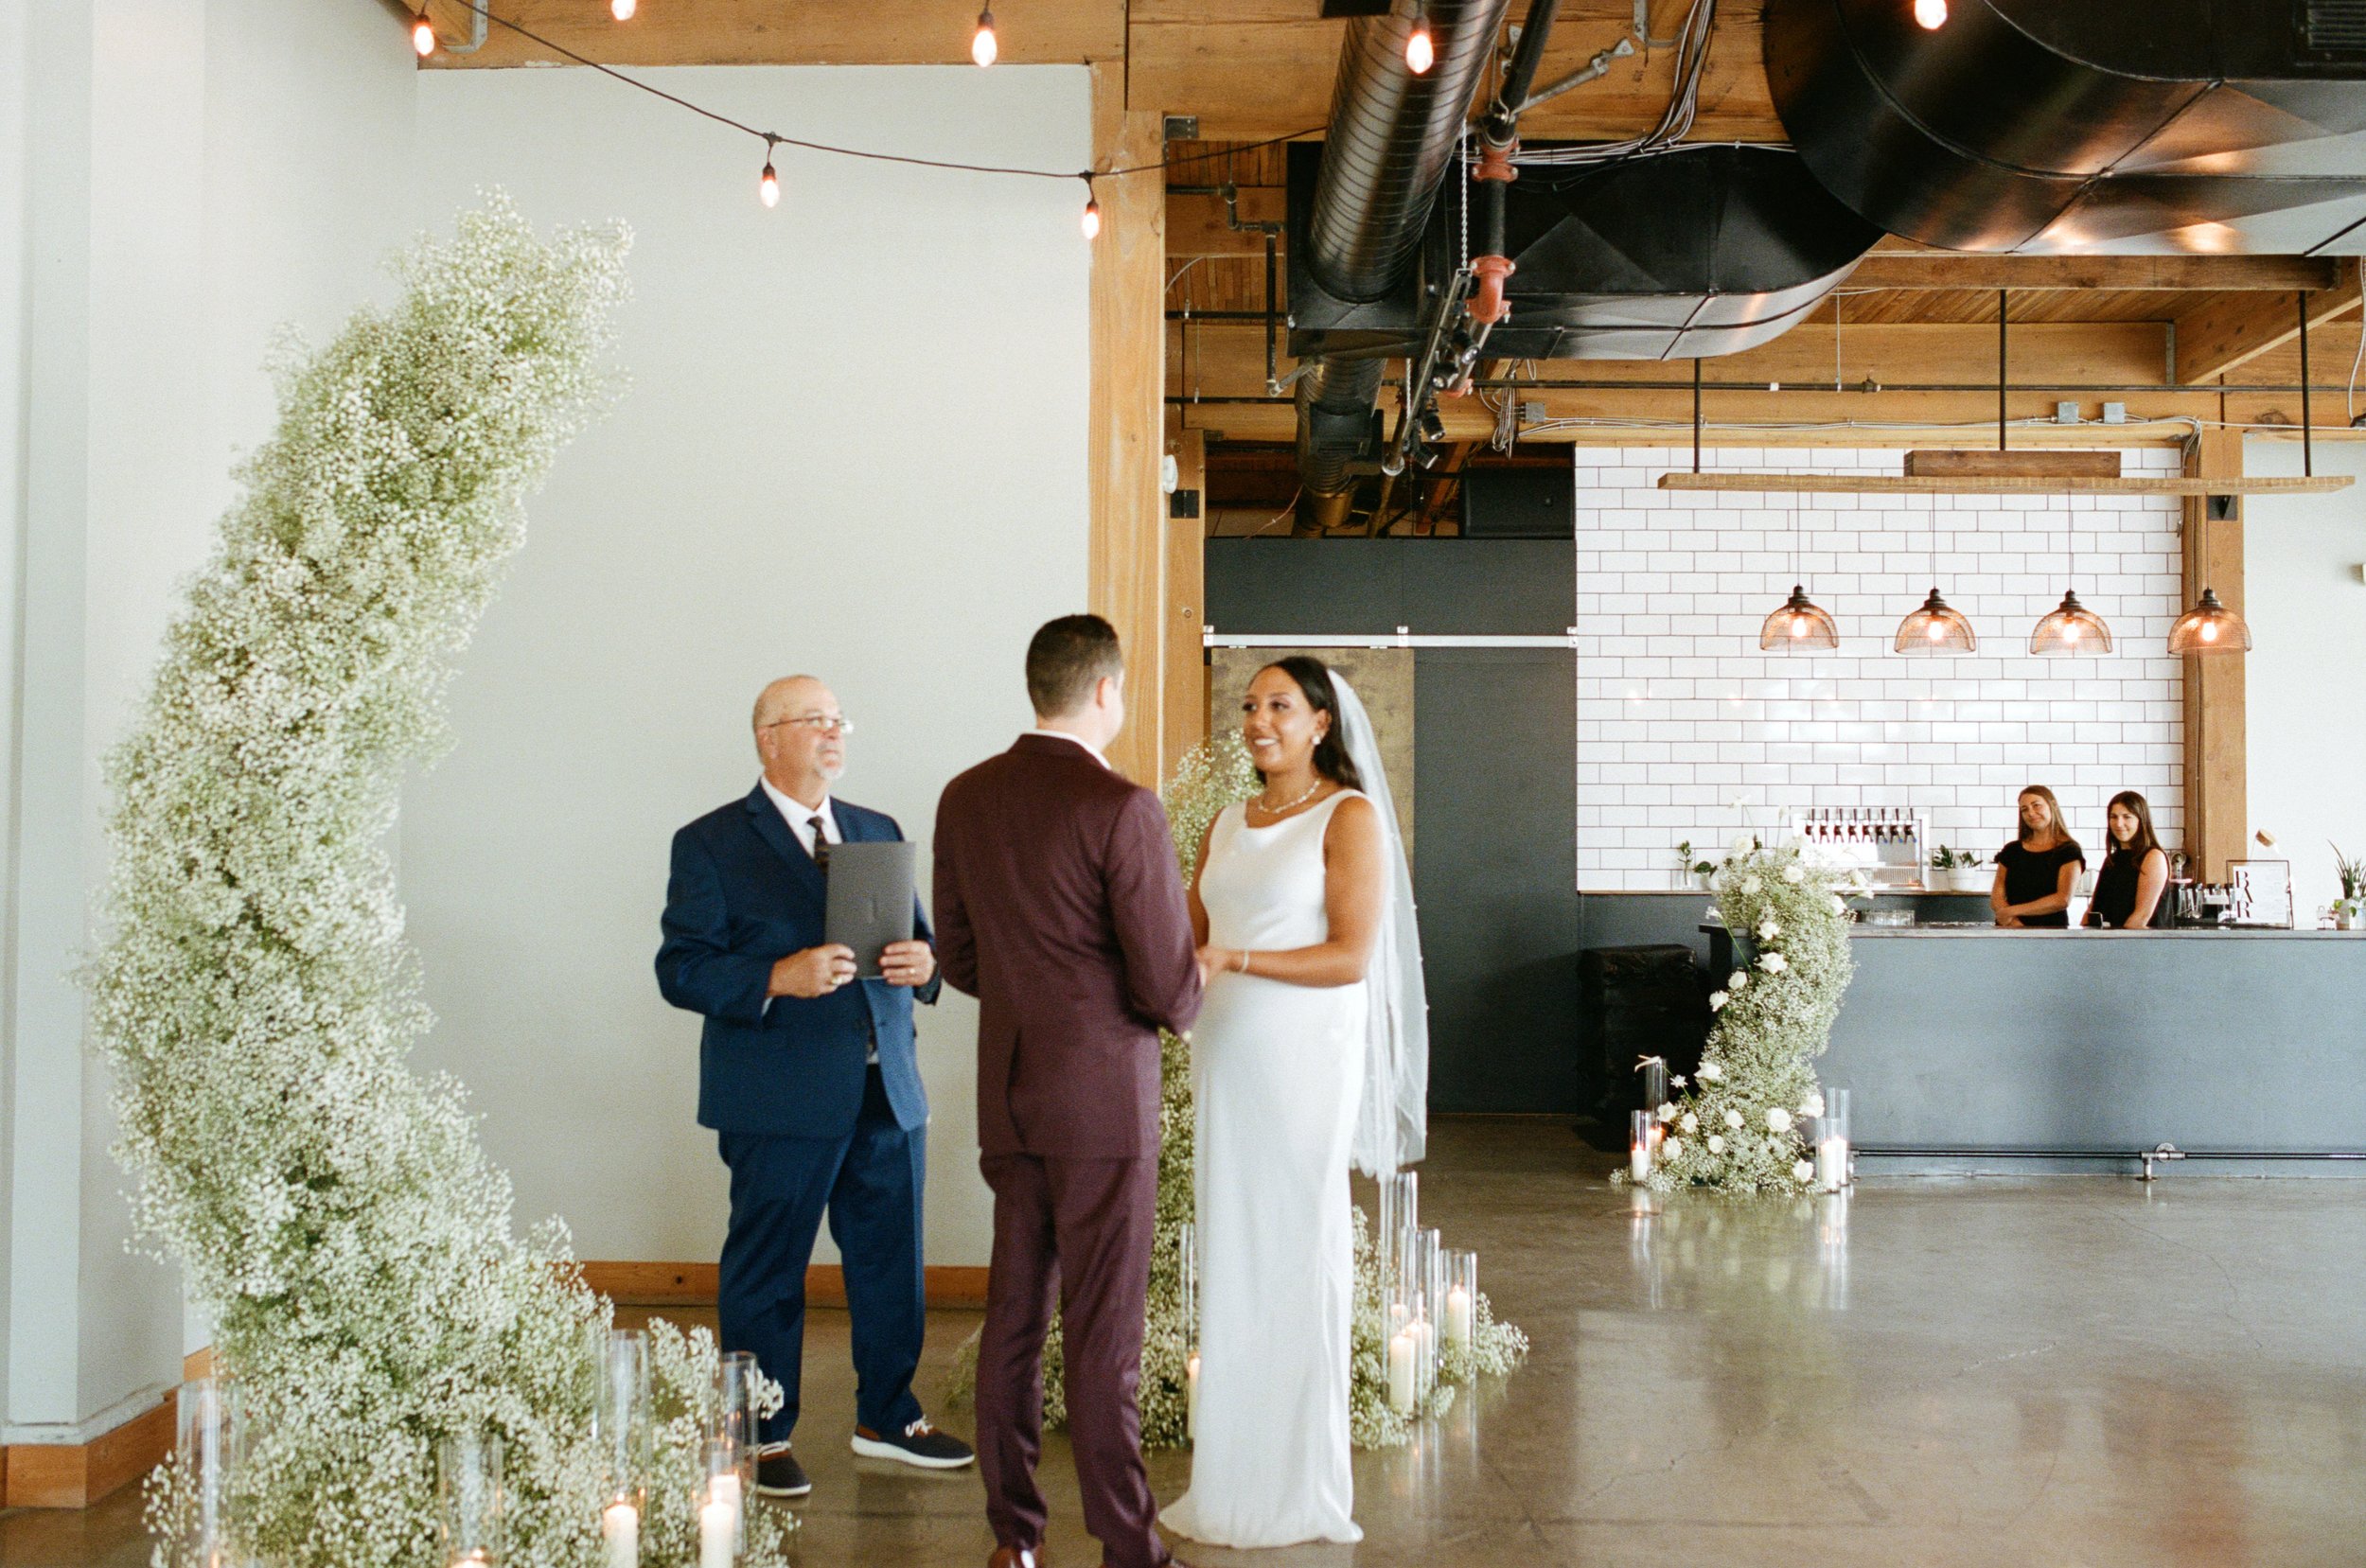 indoor wedding ceremony with bride and groom holding hands. Wedding photos on film